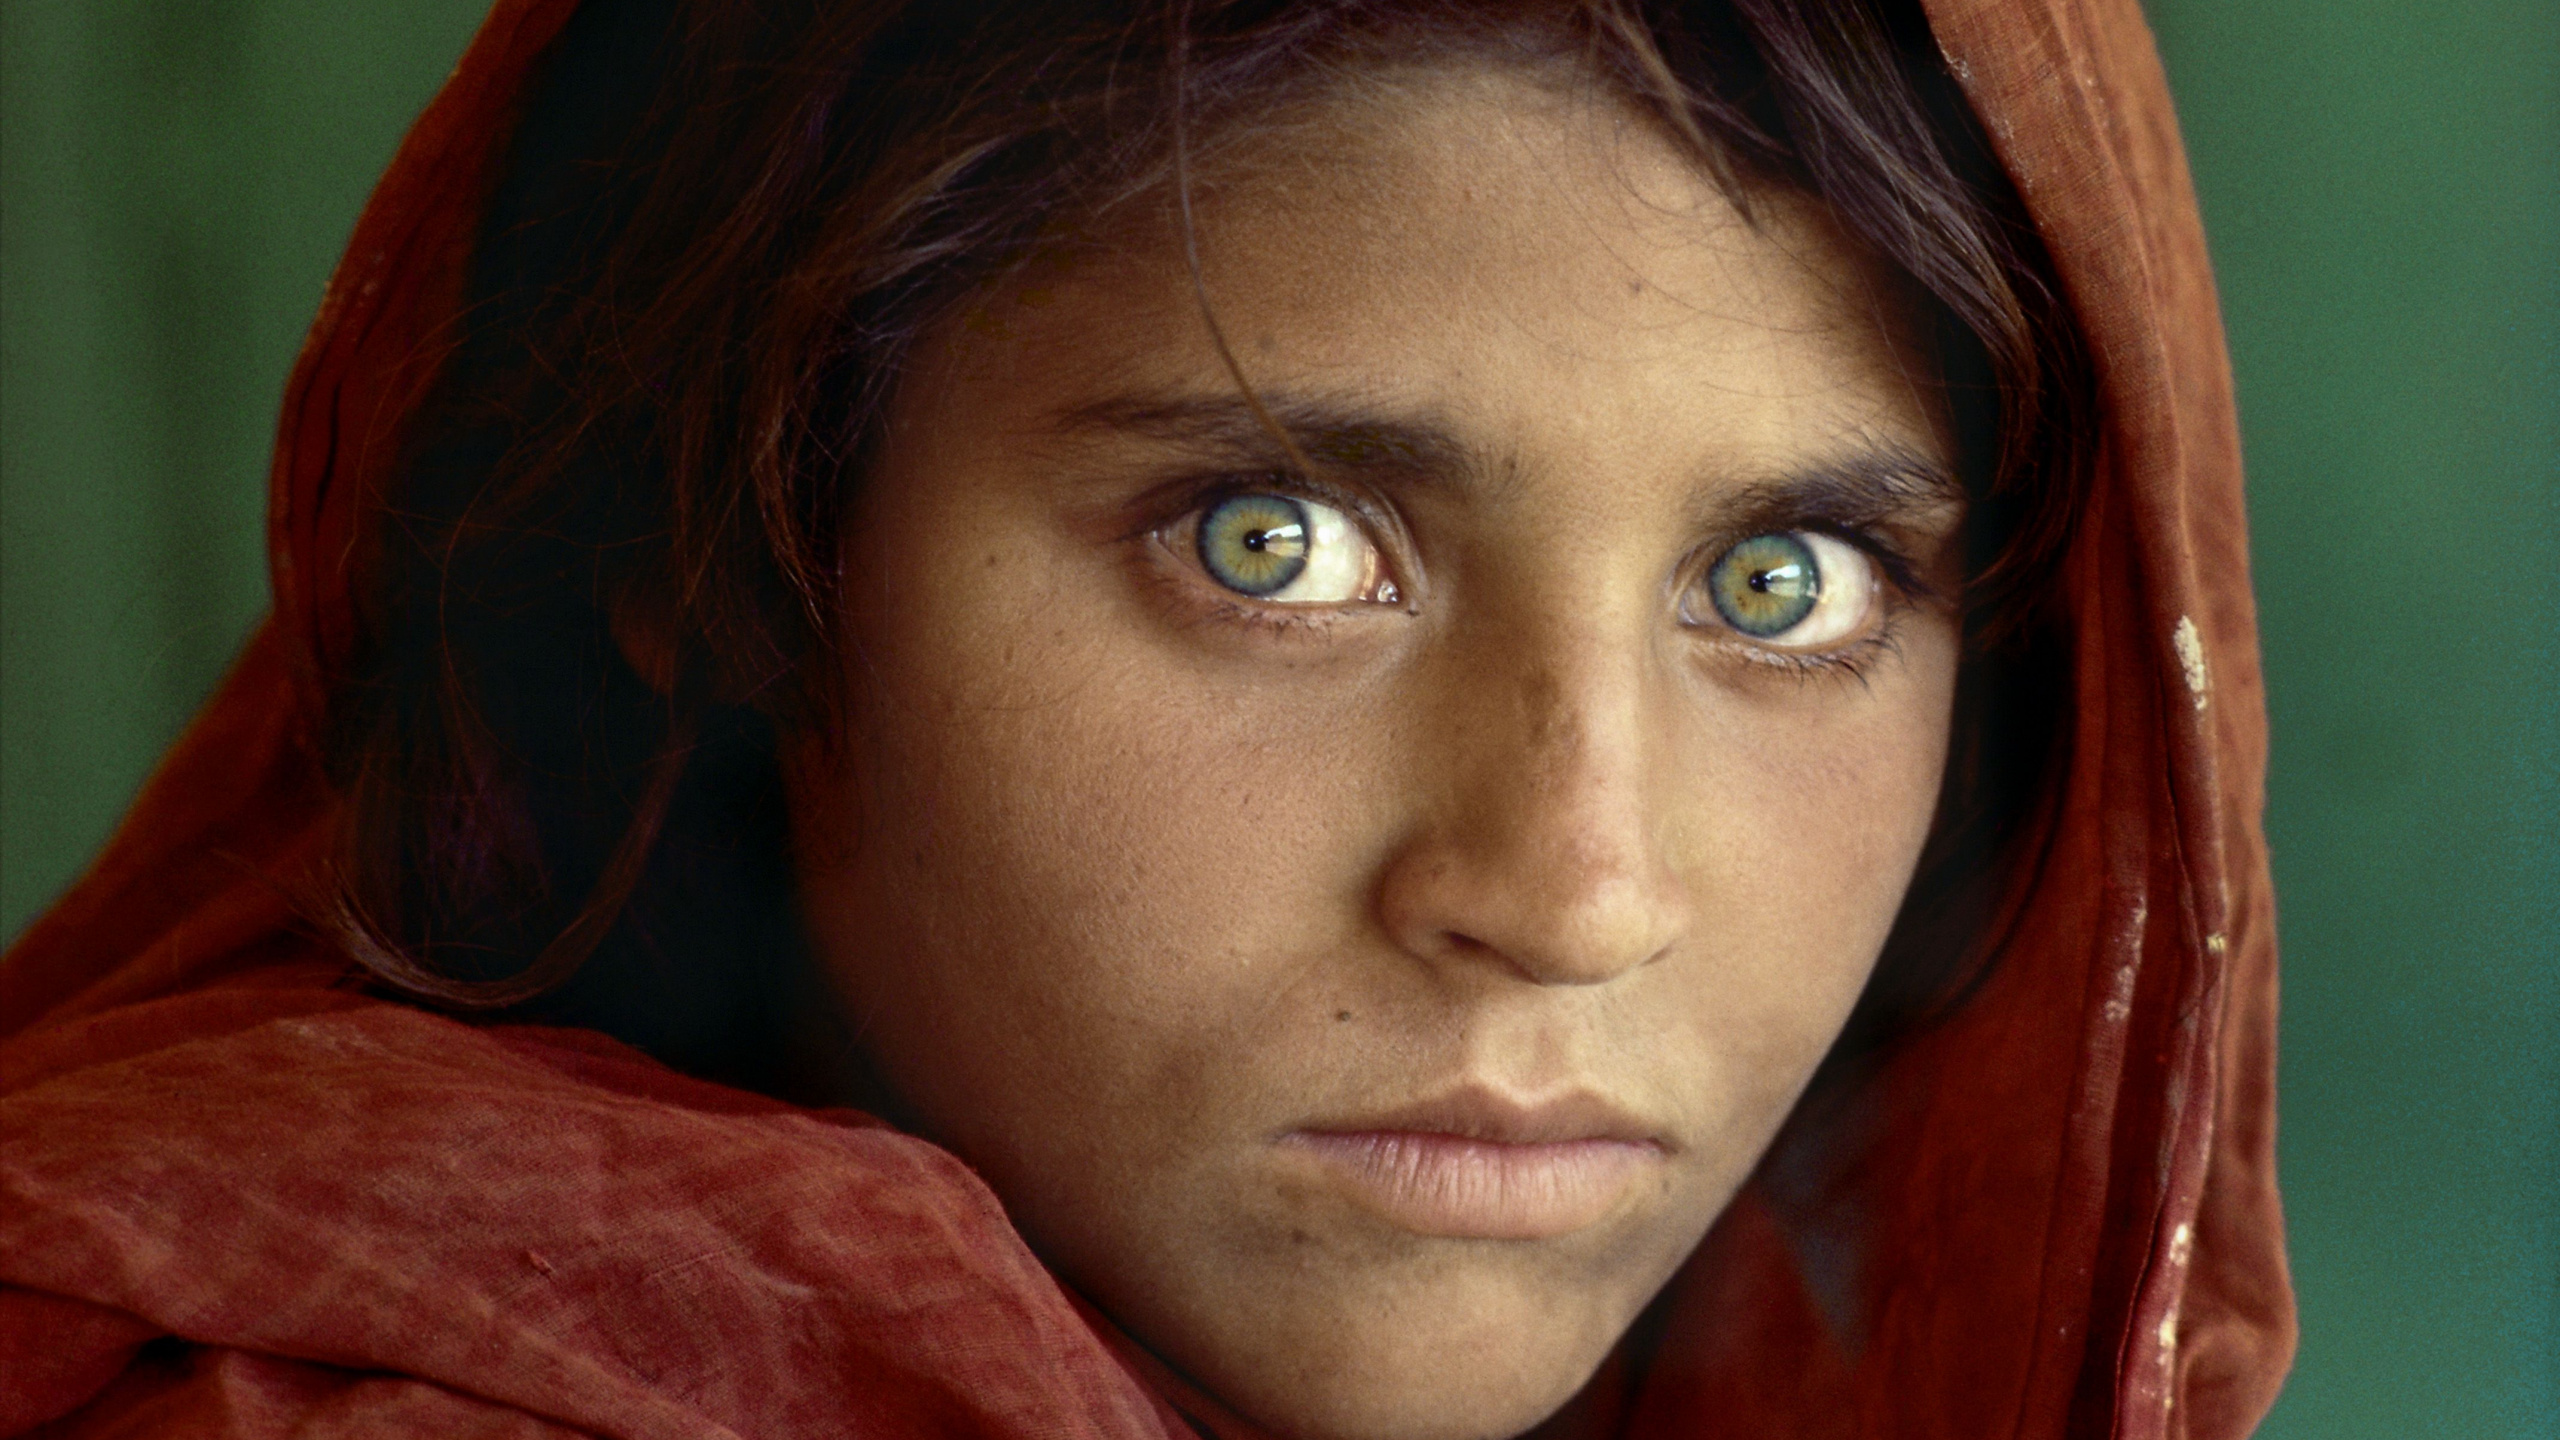 Afghanisches Mädchen, Afghanistan, National Geographic, Gesicht, Auge. Wallpaper in 2560x1440 Resolution